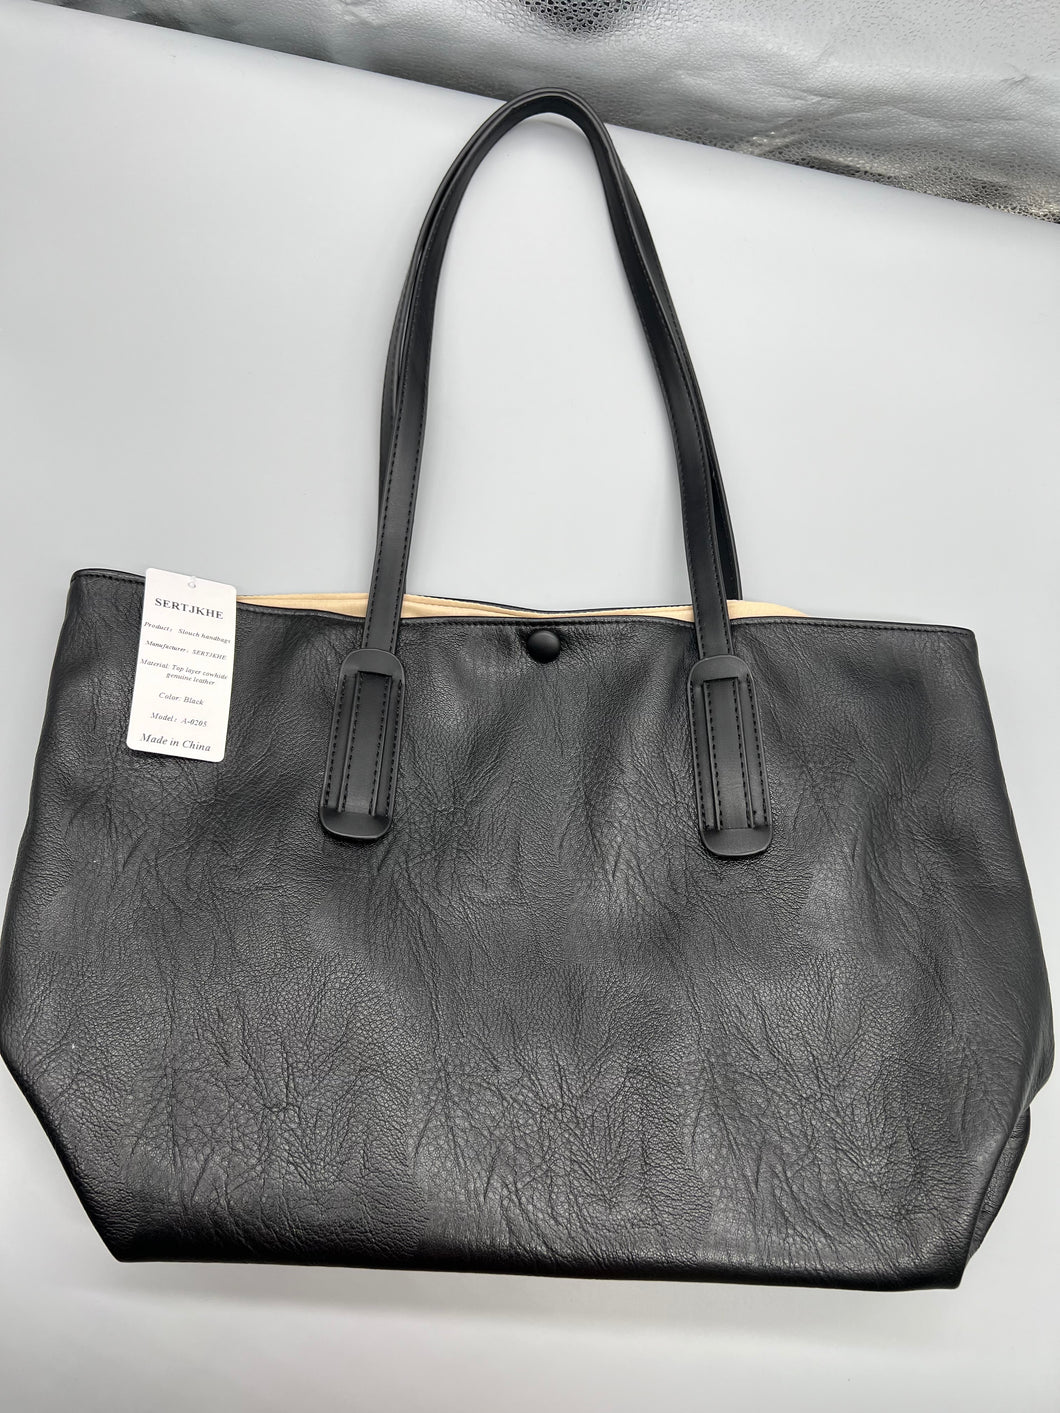 SERTJKHE Slouch handbags,Handbags Womens Genuine Leather Shoulder Bag Top Handle Handbags Cross Body Bags for Office Lady.